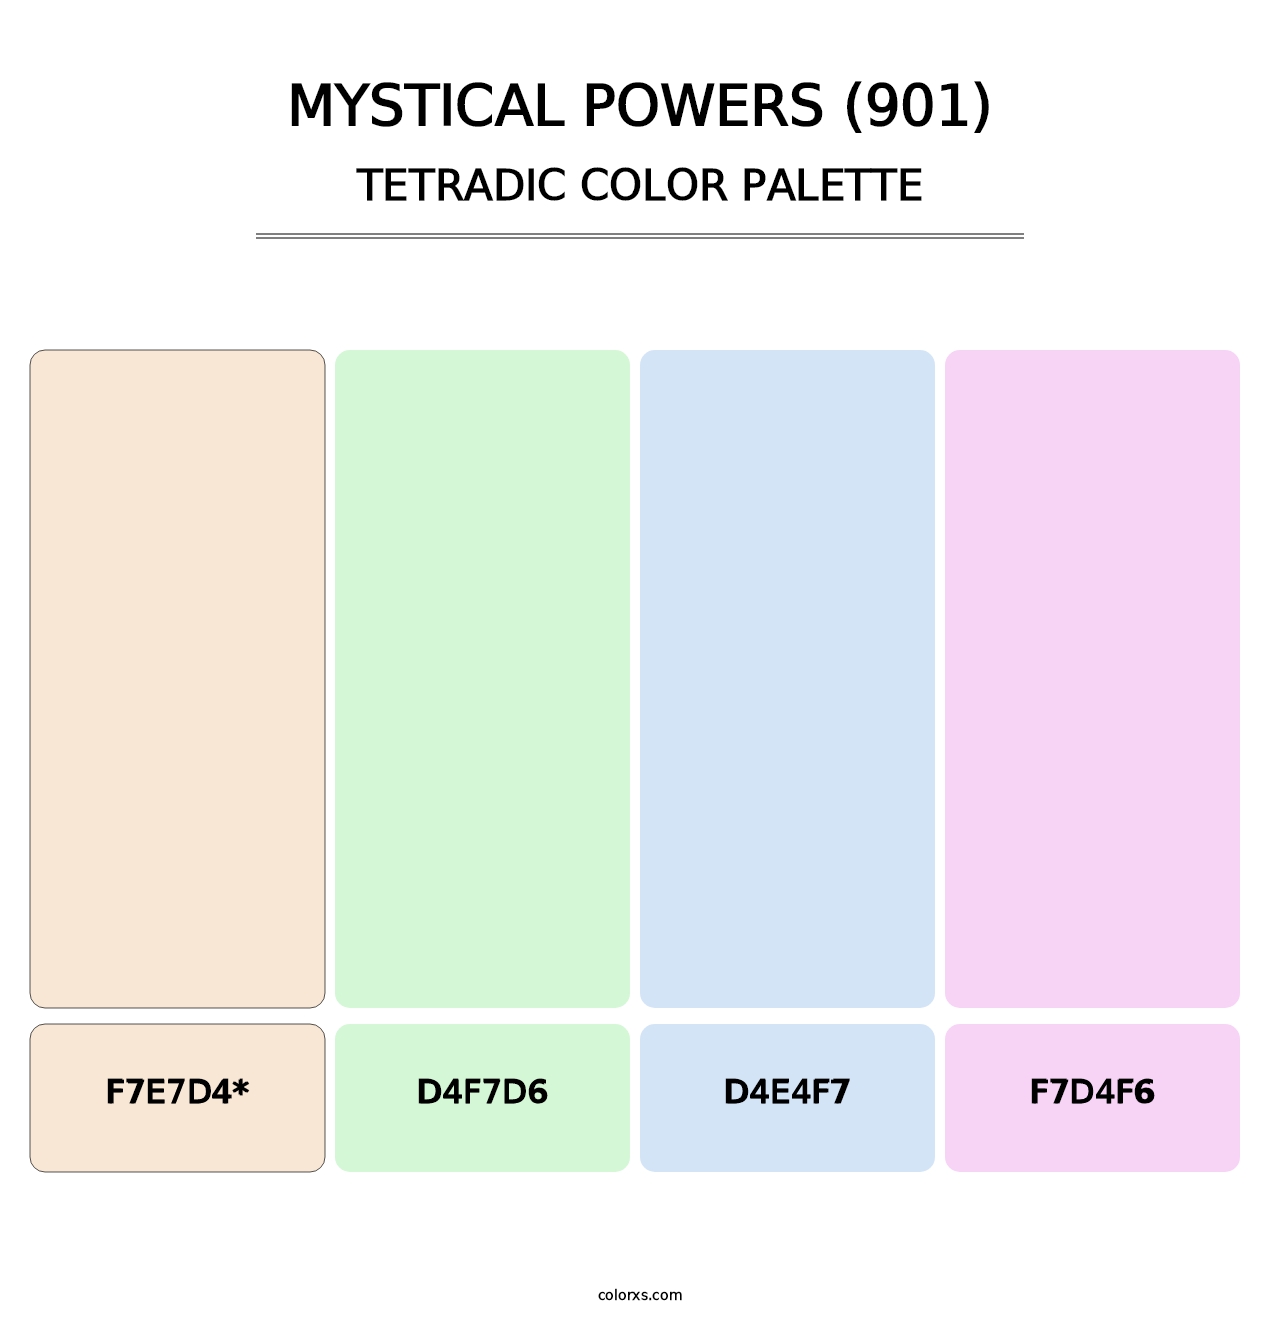 Mystical Powers (901) - Tetradic Color Palette